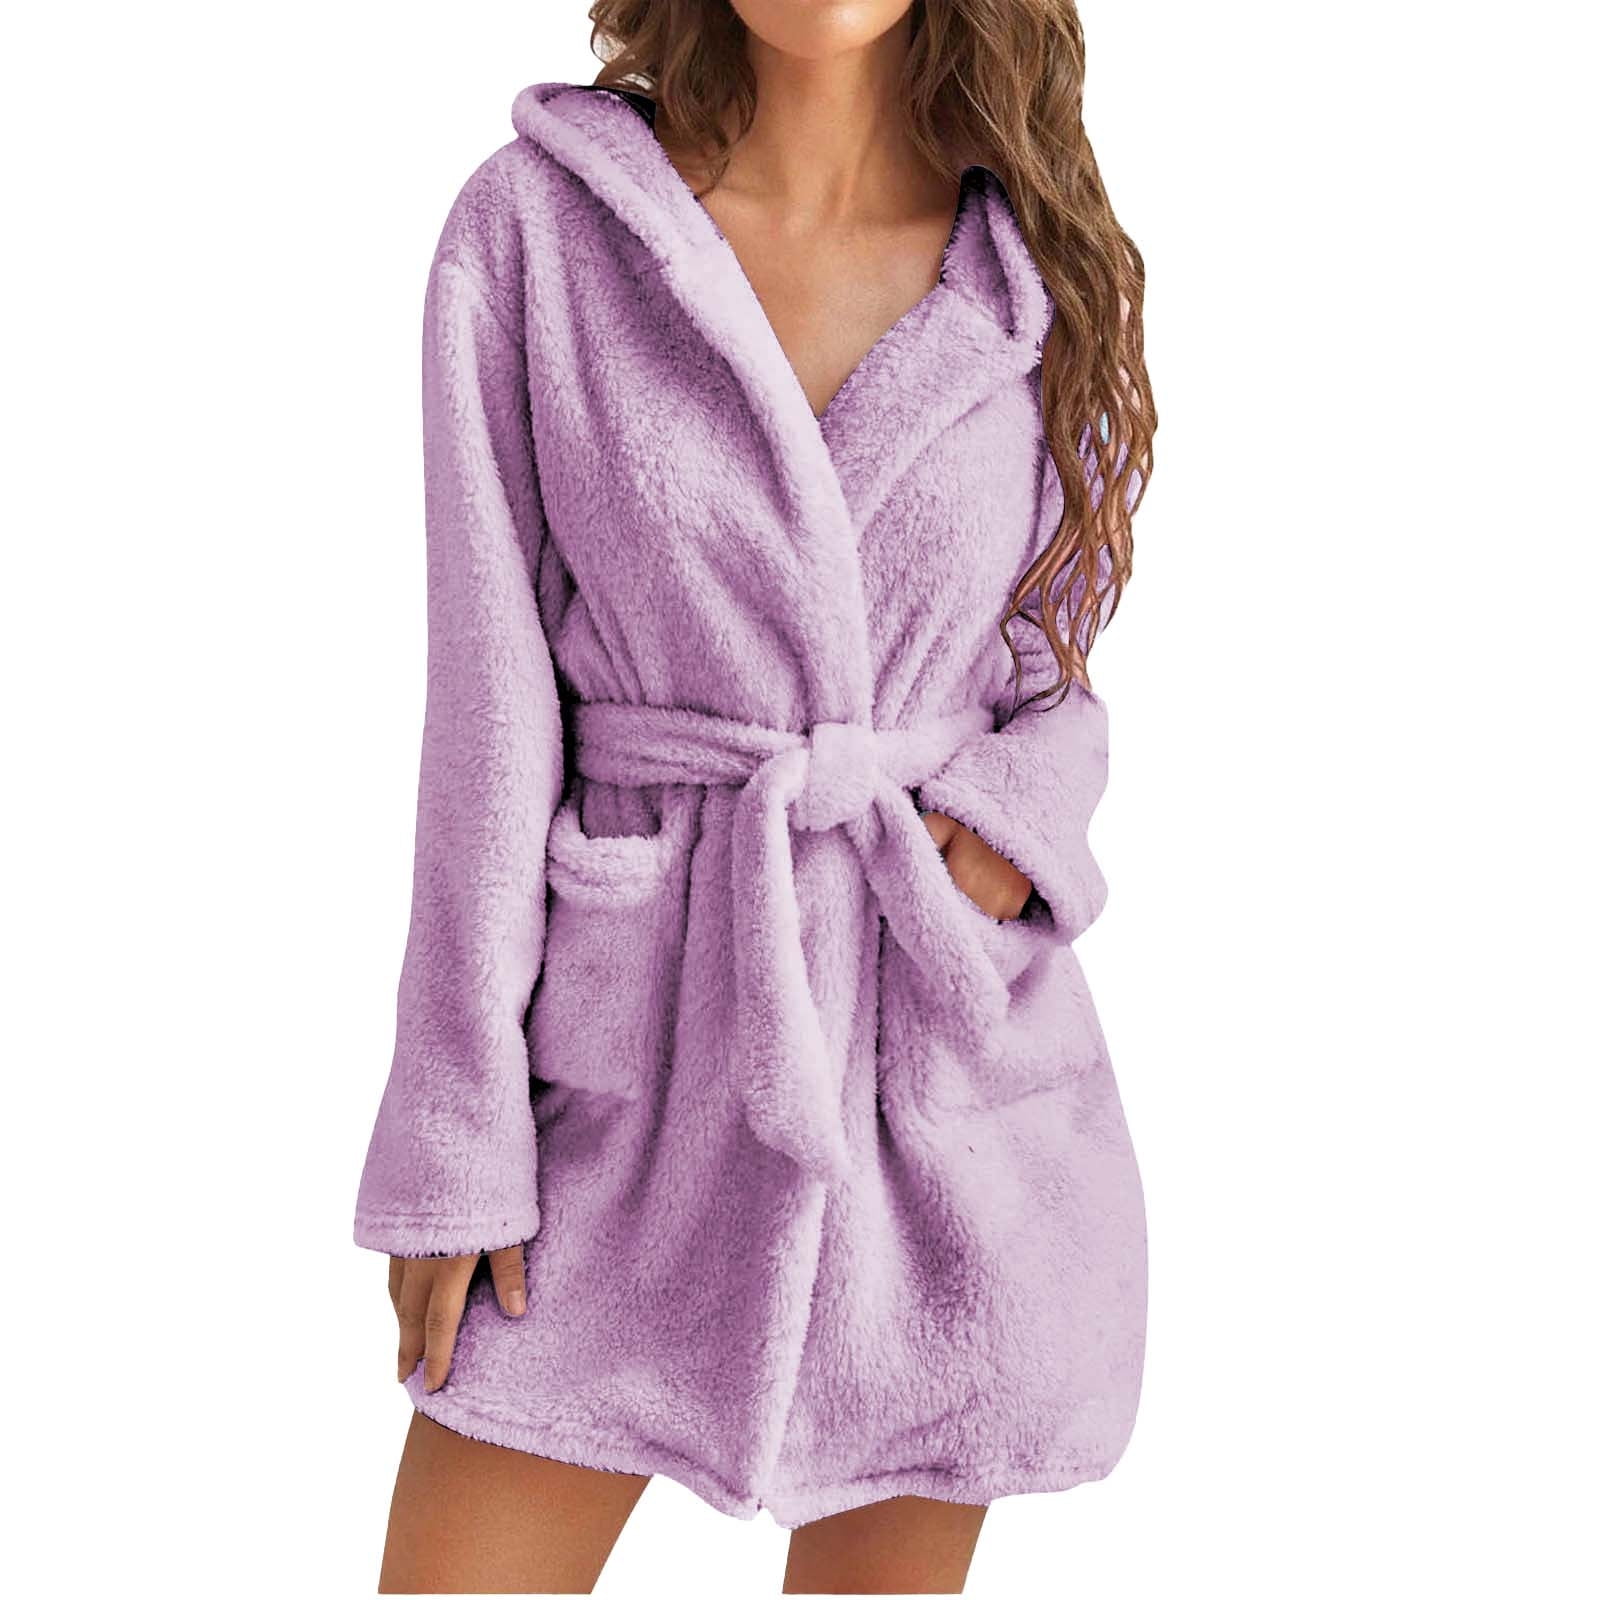 YanHoo Towel Bath Robe Women Plush Fluffy Terry Cloth Lightweight Winter Warm Fleece Bathrobe Gown Soft Ladies Spa Shower 21781e84 6e79 409b 8122 4982117a2dd3.20d0f974a4eb28f8f6d5c5e51028e3b2